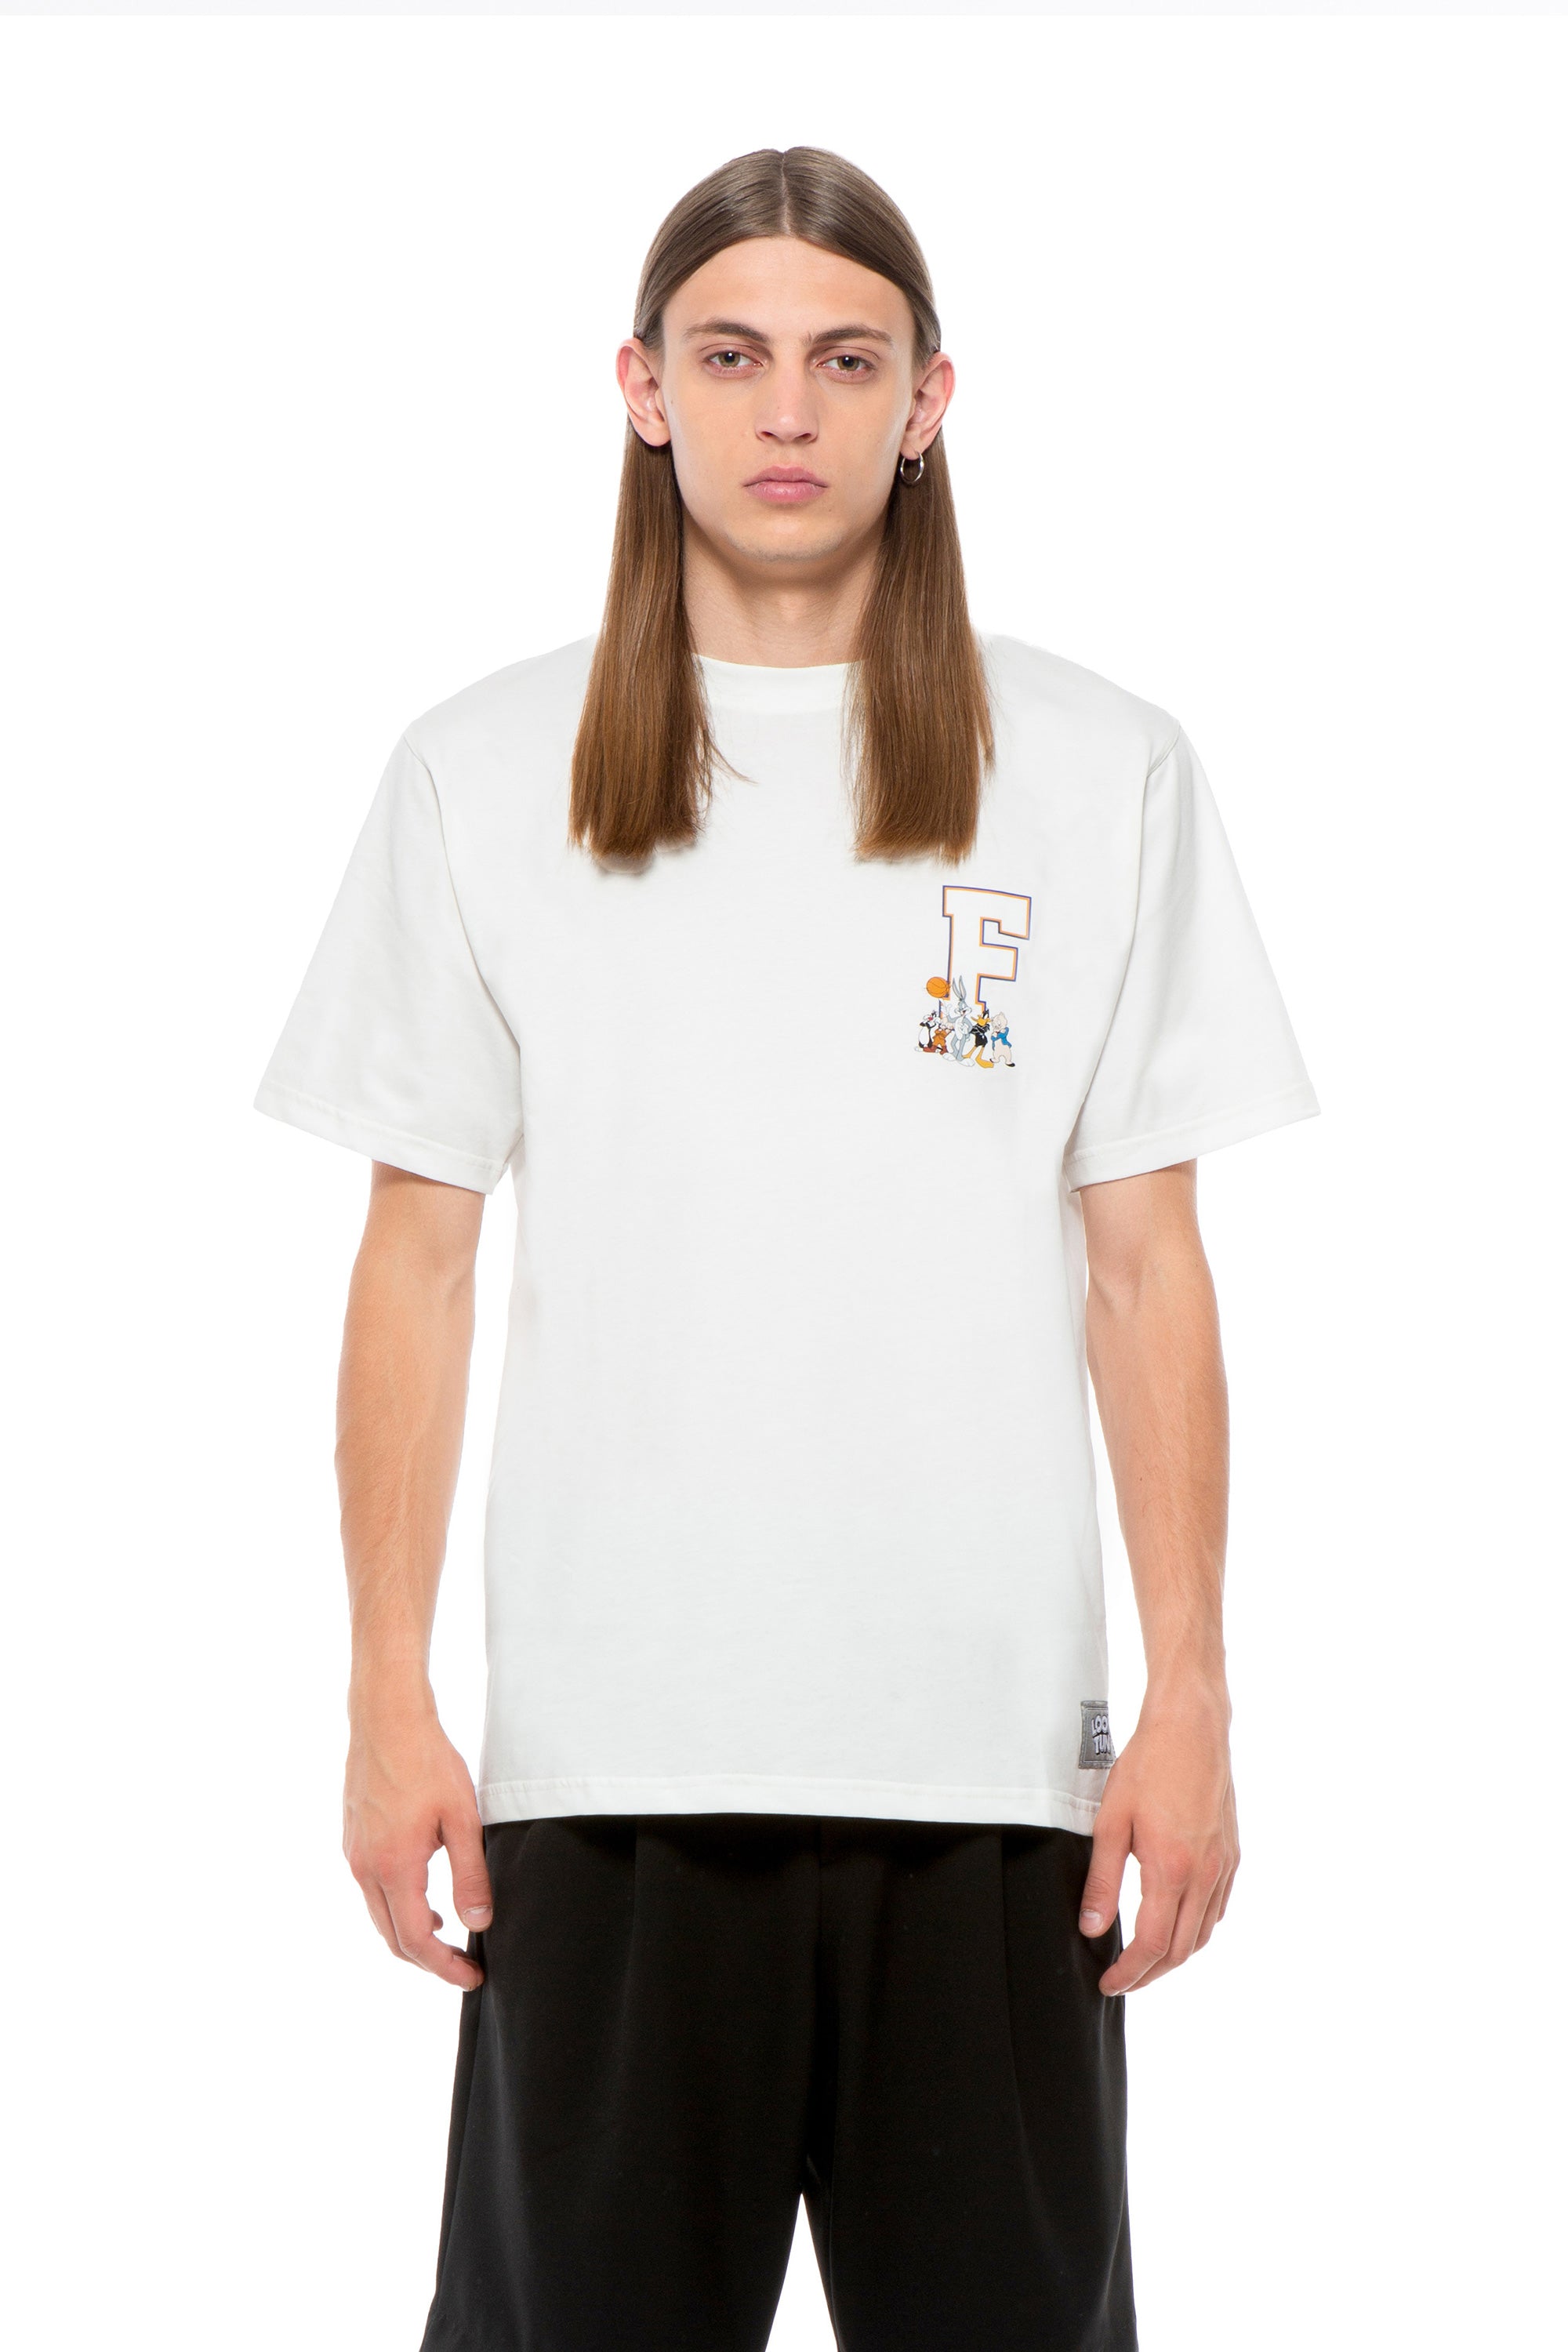 T-Shirt "SS23" Members Club